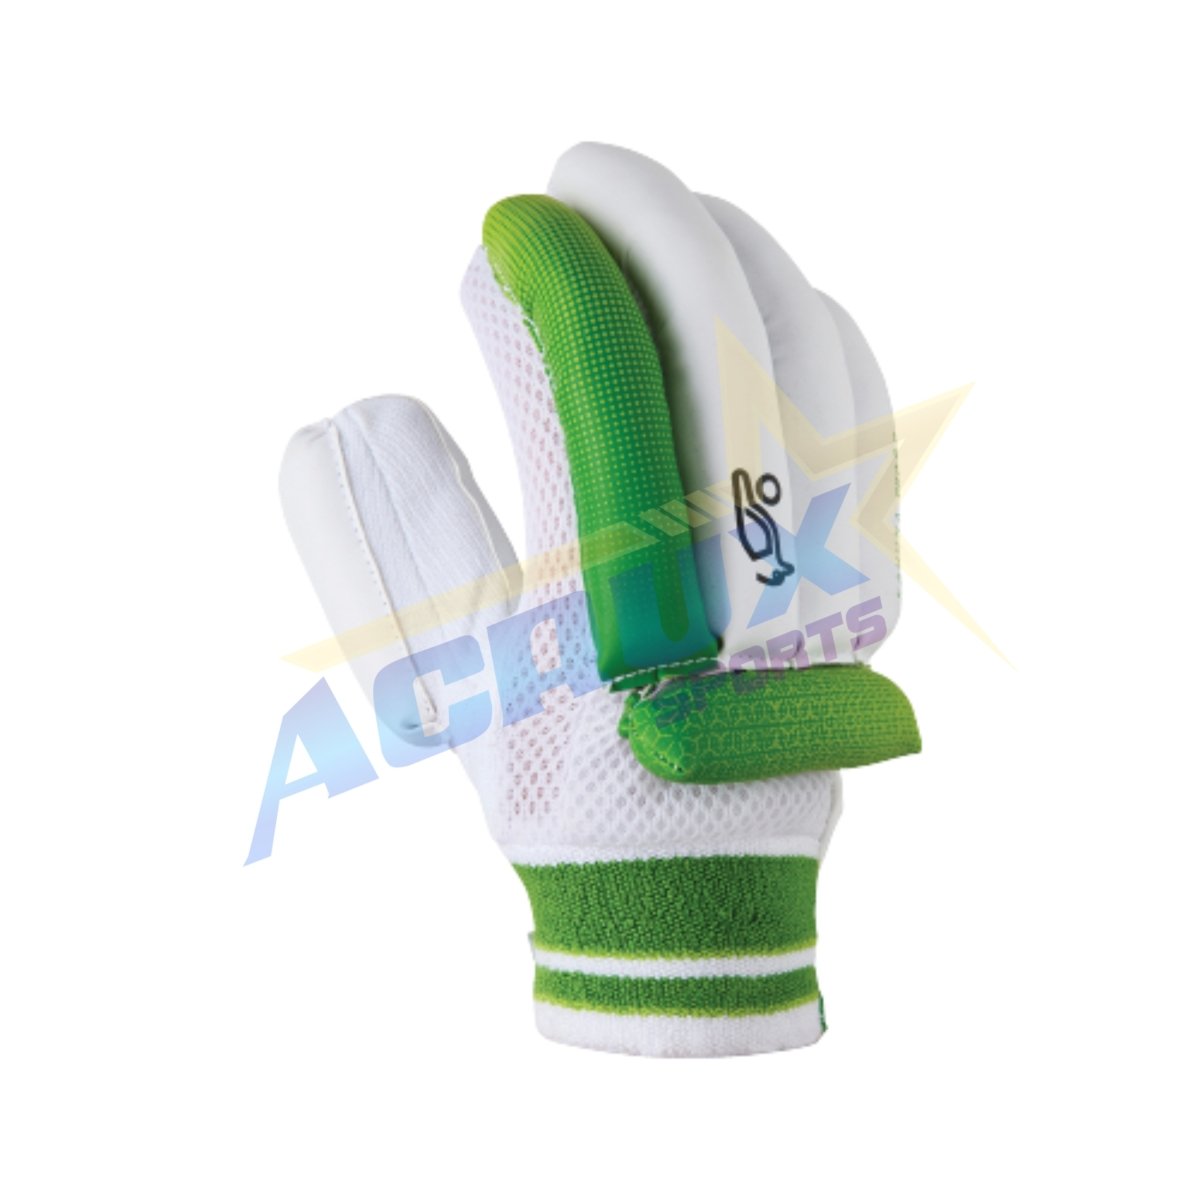 Kookaburra Kahuna Pro 9.0 Cricket Batting Gloves.